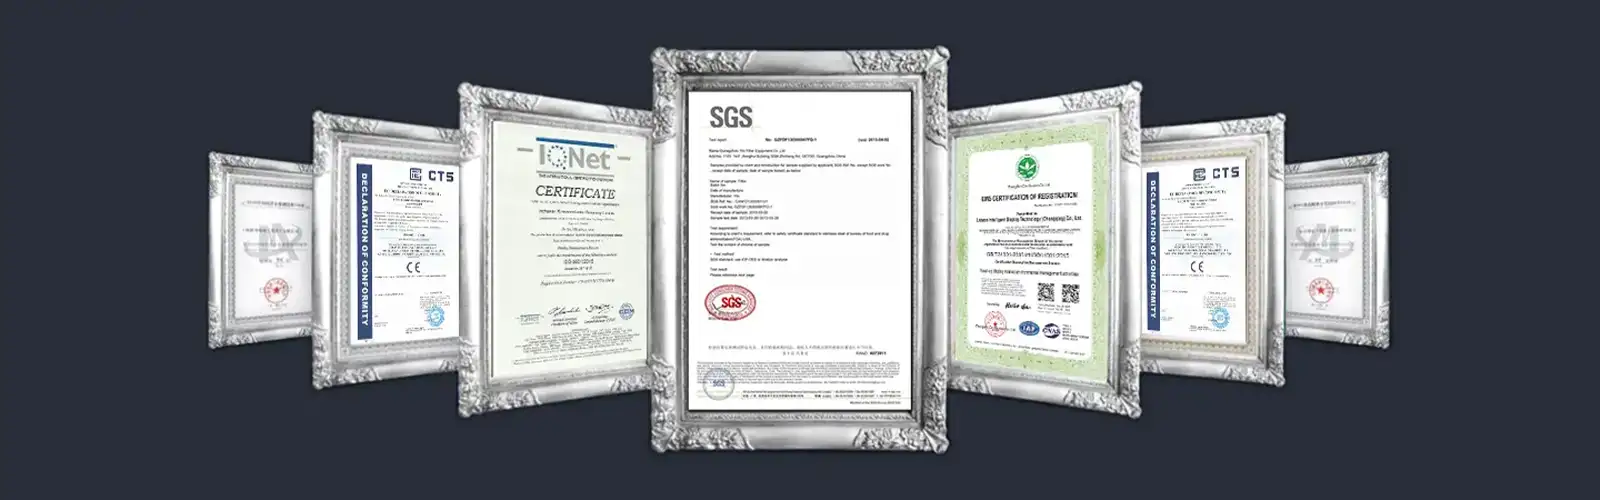 ribbon-certification-System